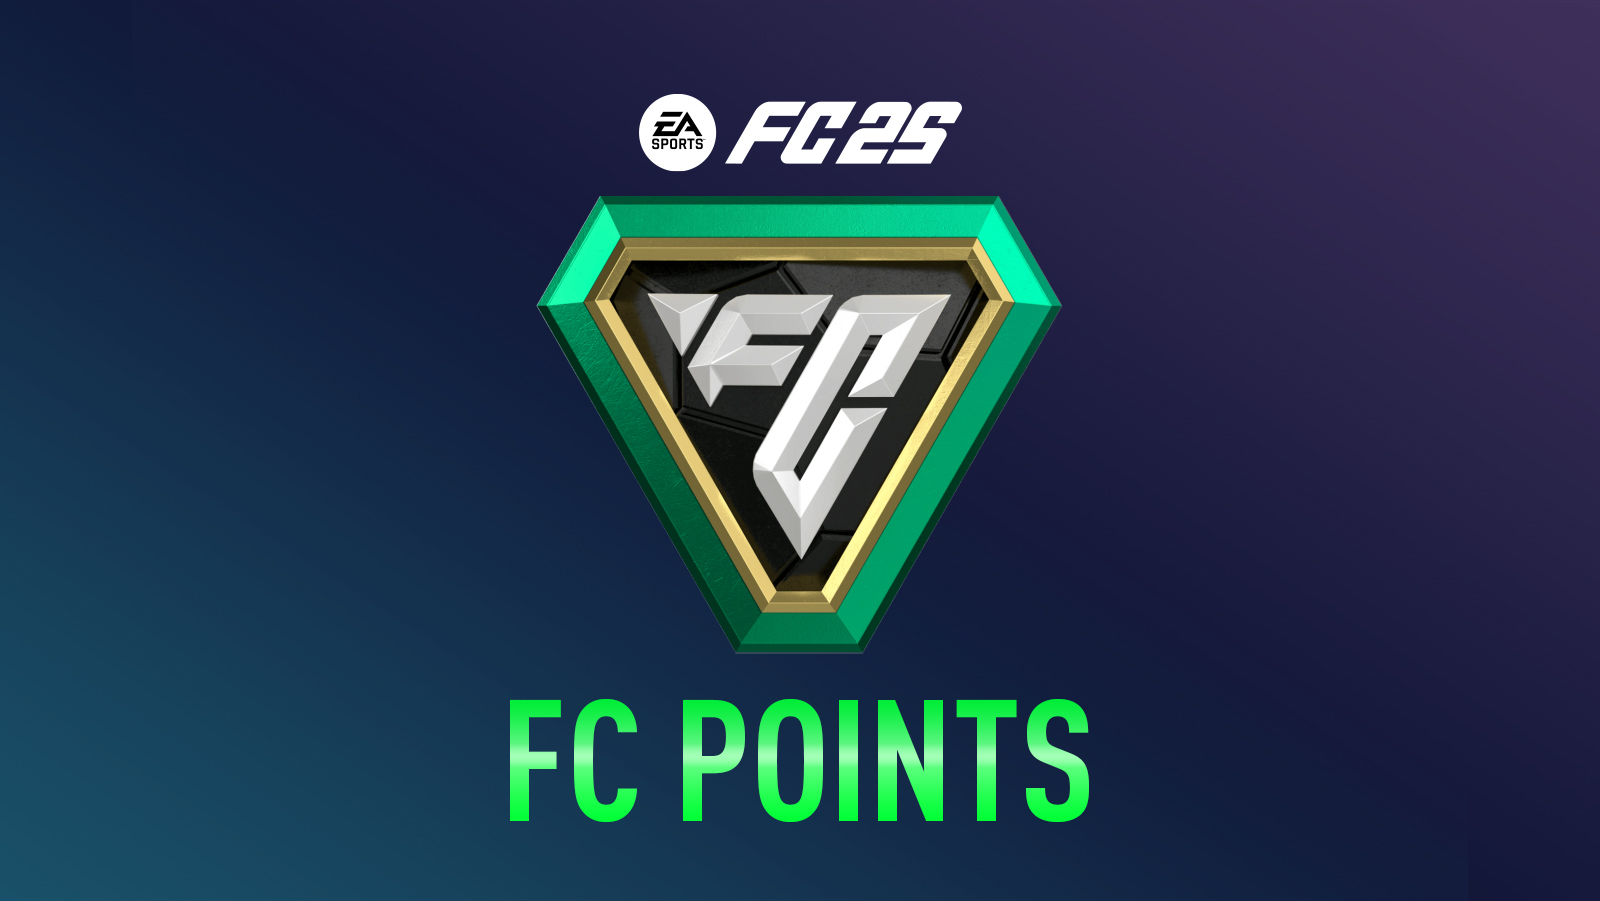 FC 25 Points